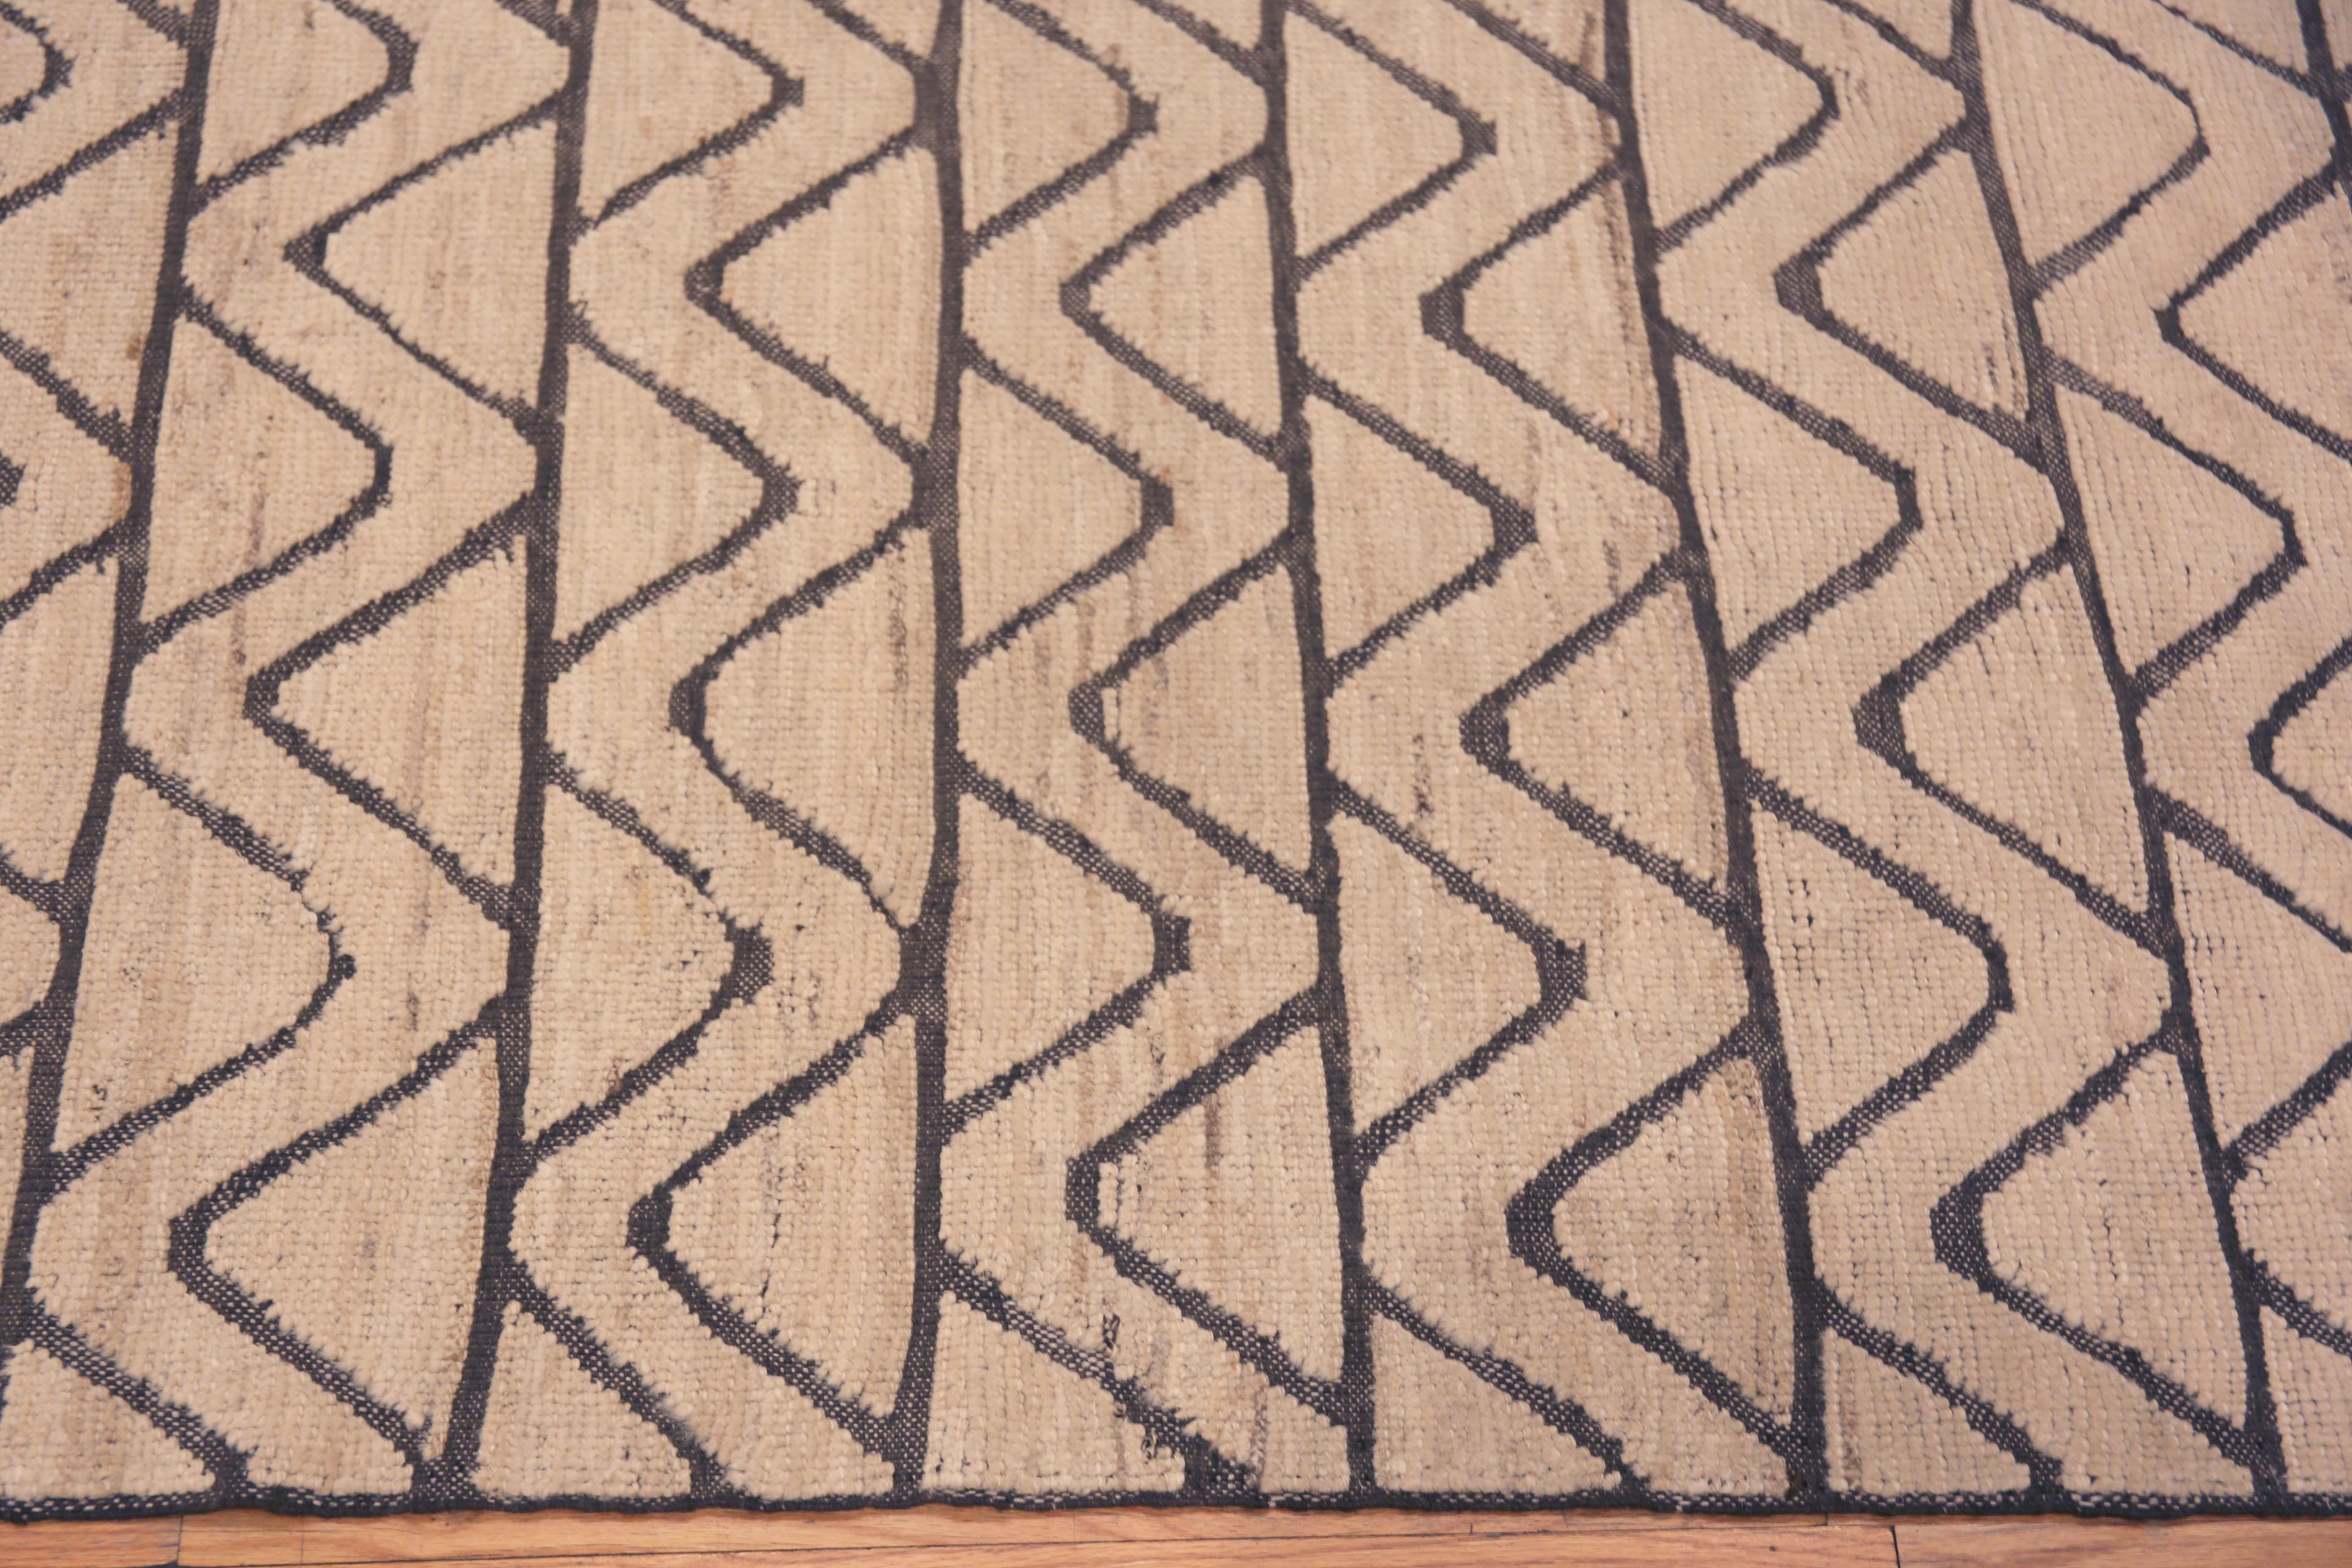 Central Asian Nazmiyal Collection Neutral Tribal Geometric Modern Hallway Runner Rug 3' x 9'8